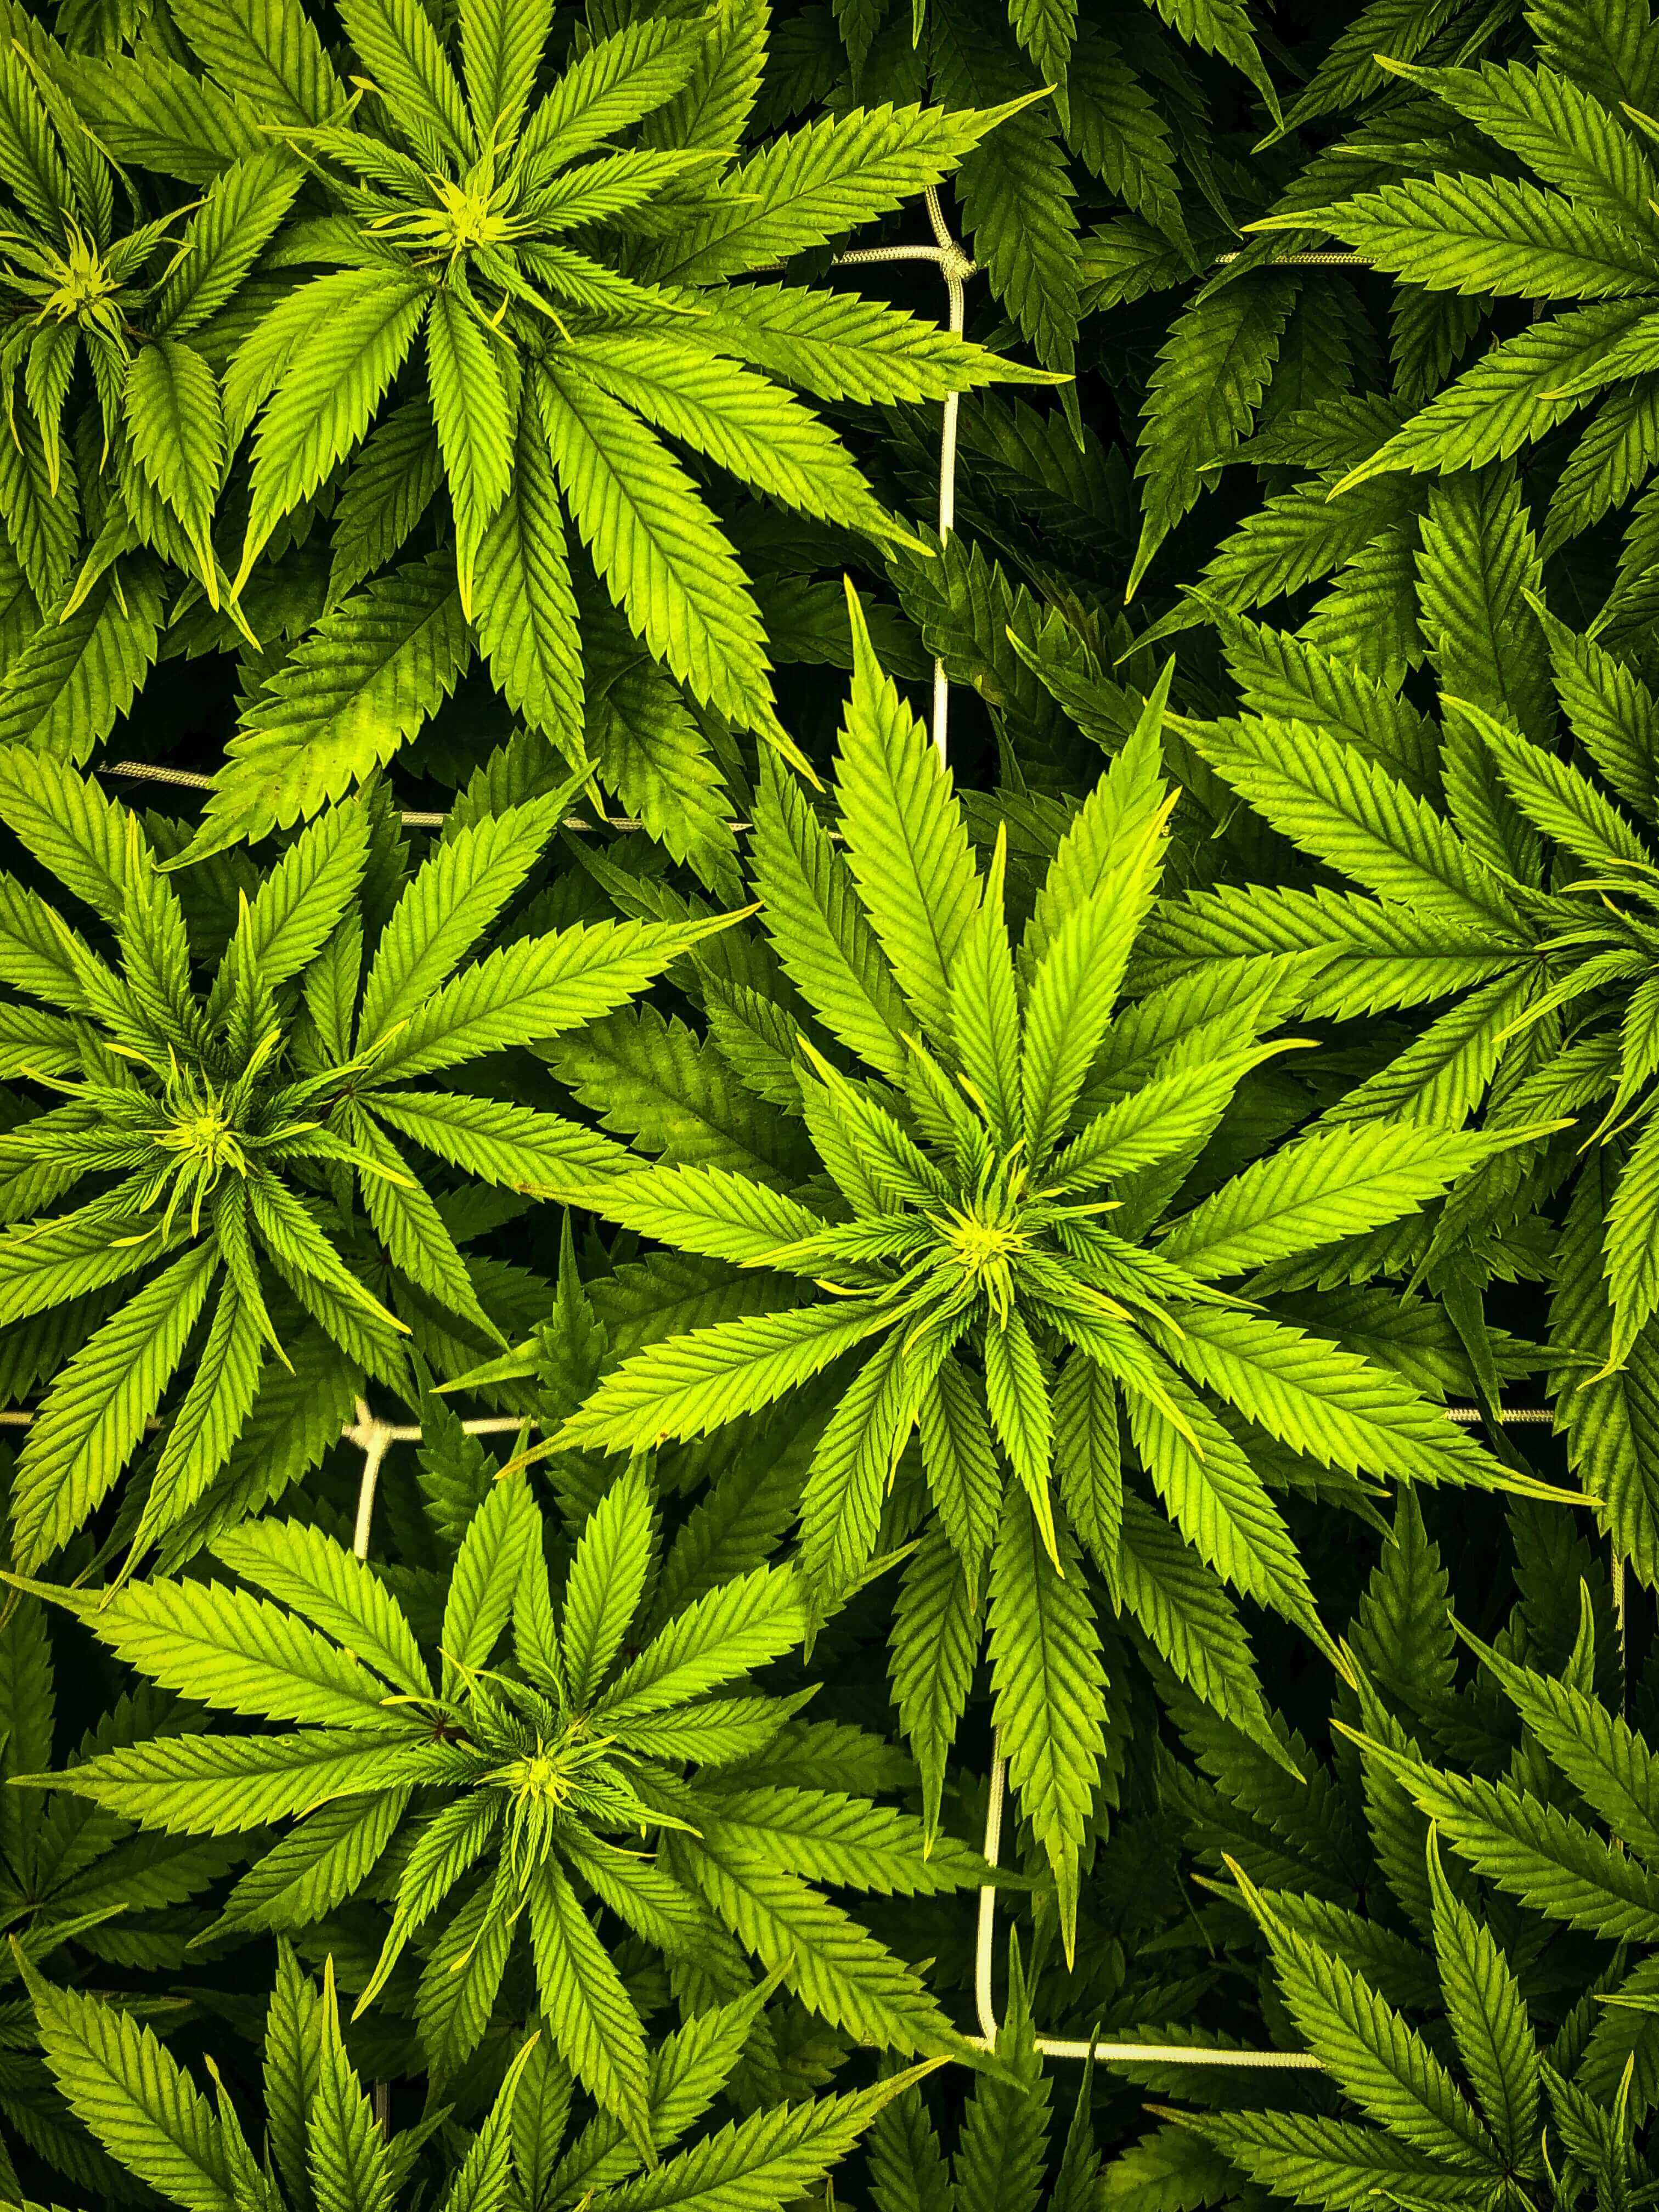 pianatgione cannabis light erba legale CBD 100% naturale weedwonka